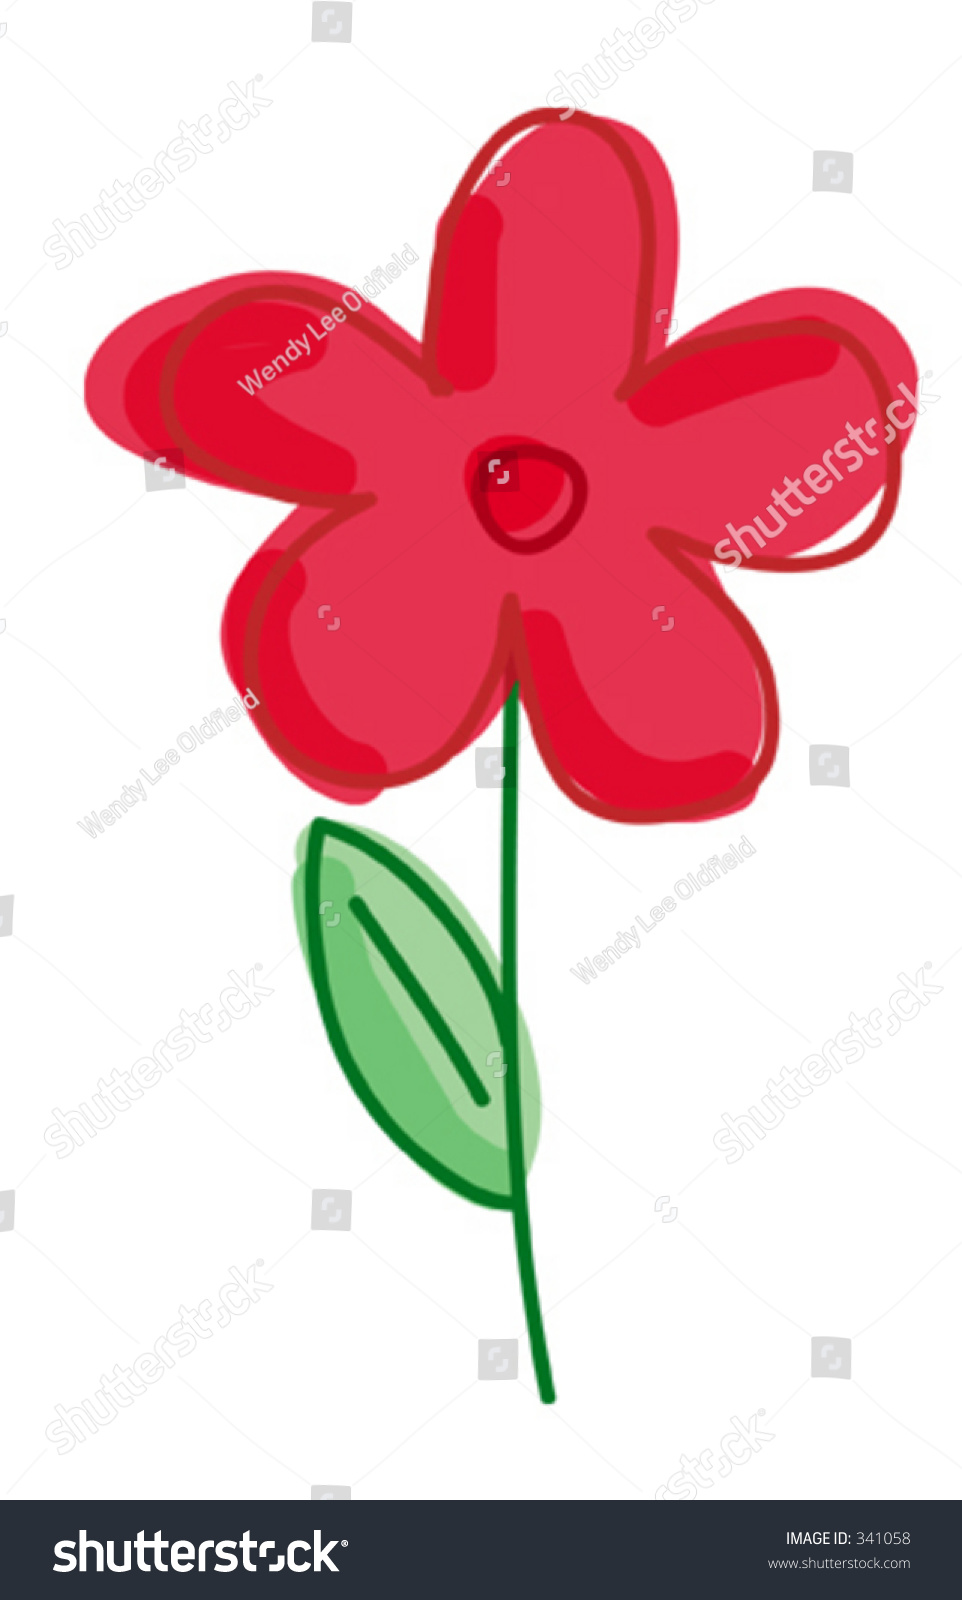 Watercolor Flower Stock Vector Illustration 341058 : Shutterstock